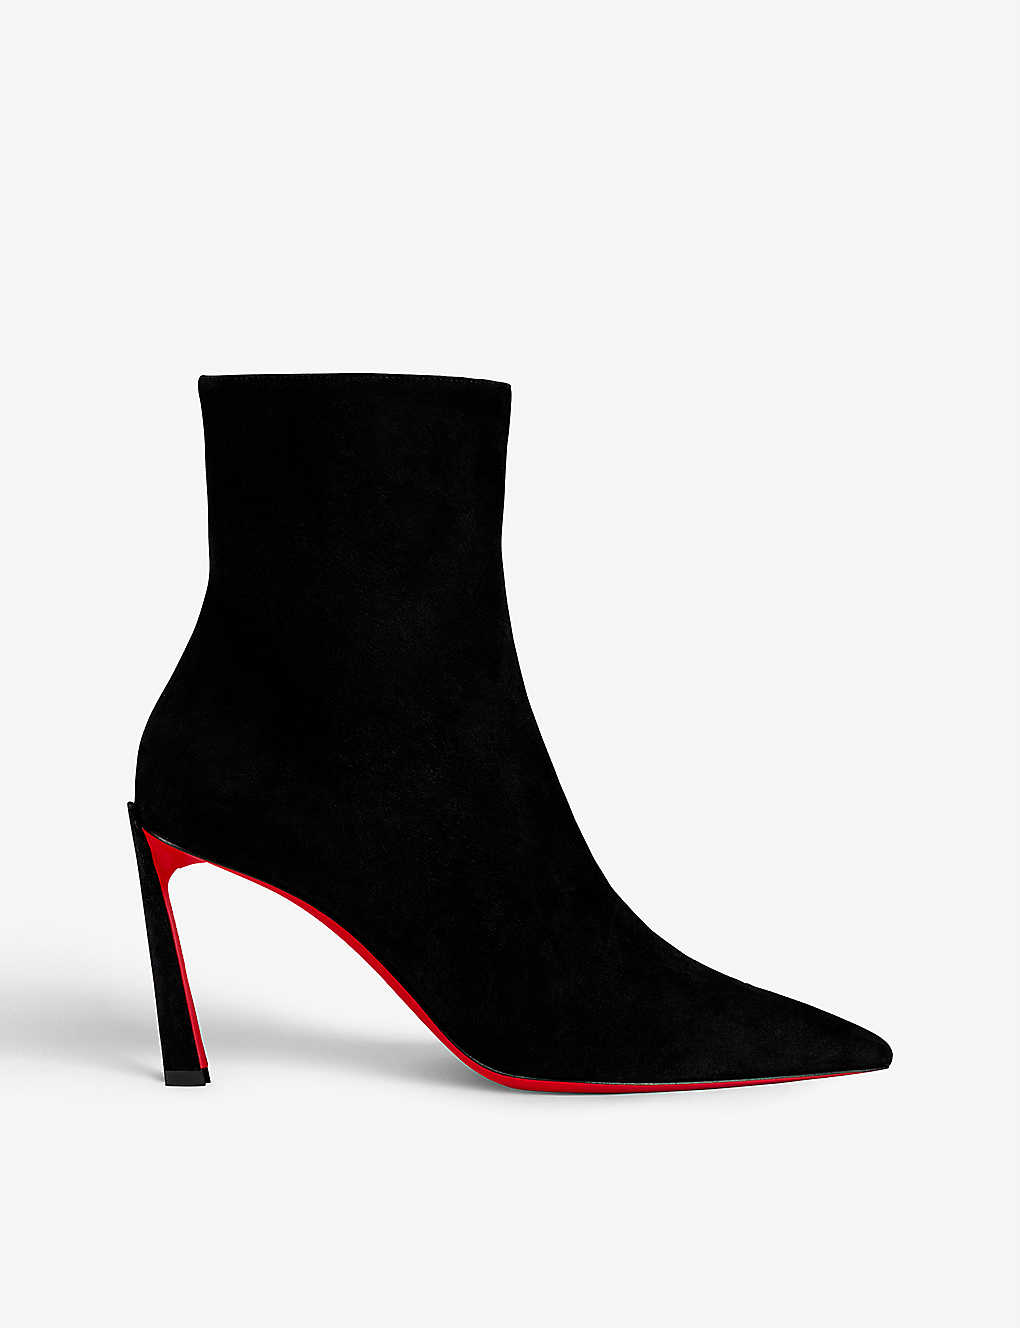 Shop Christian Louboutin Women's Black Condora 85 Suede Ankle Boots